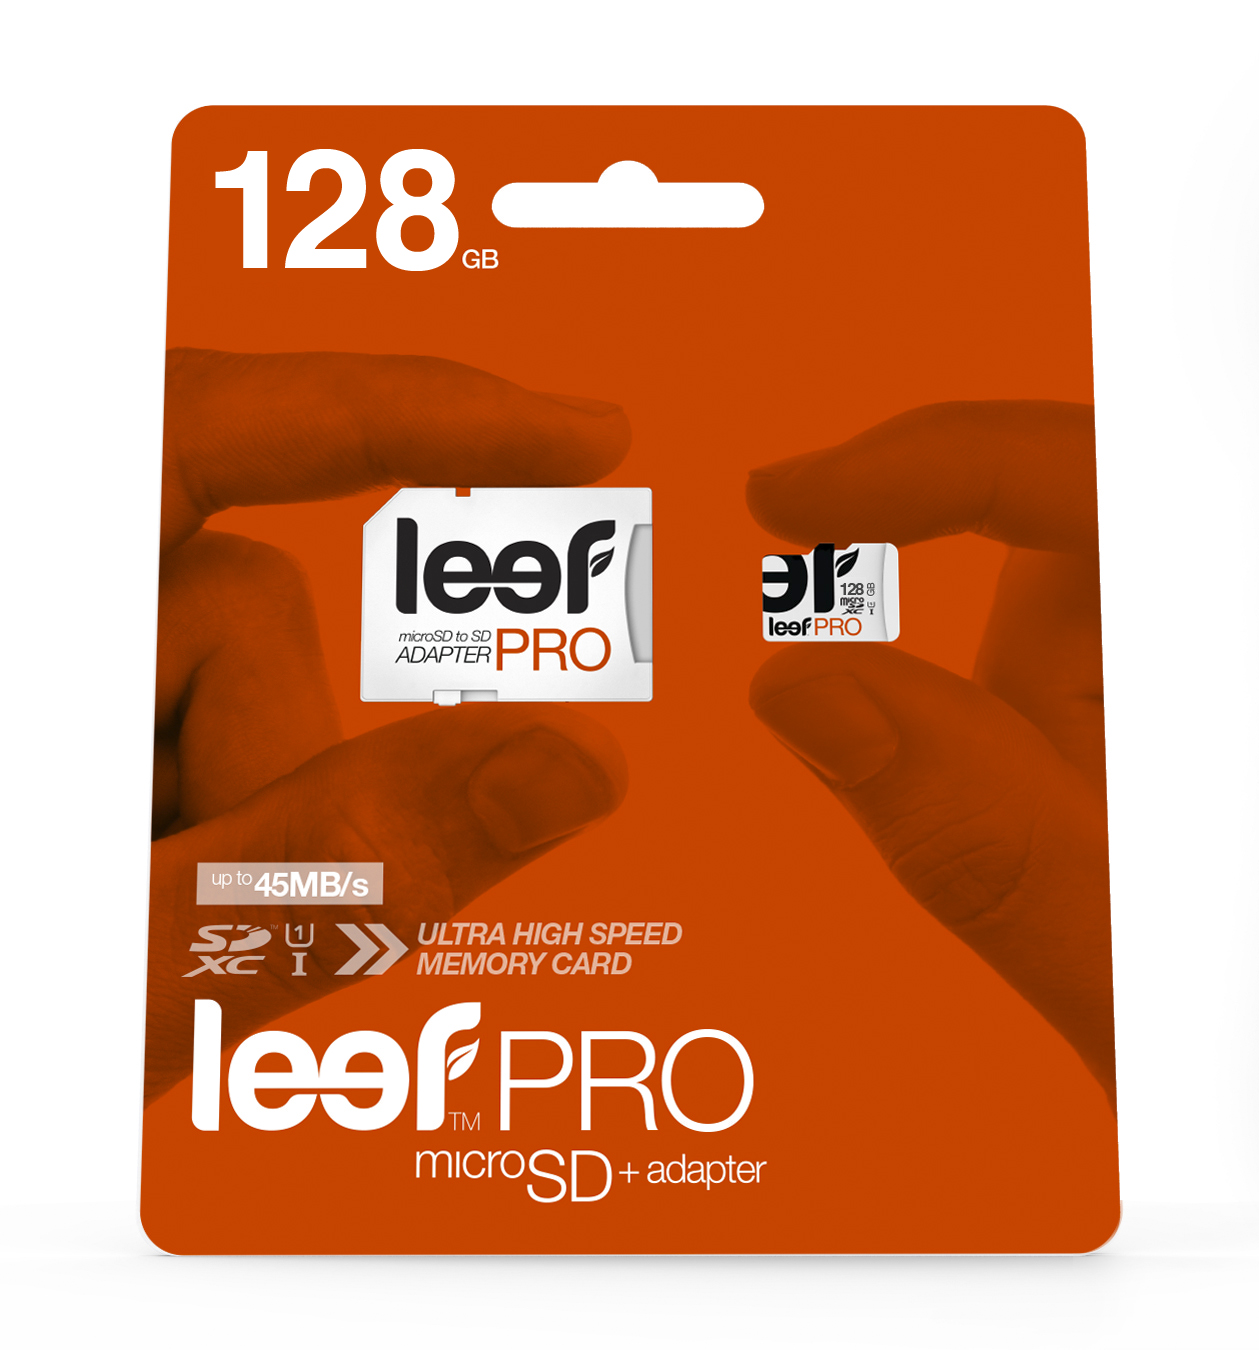 Leef PRO card